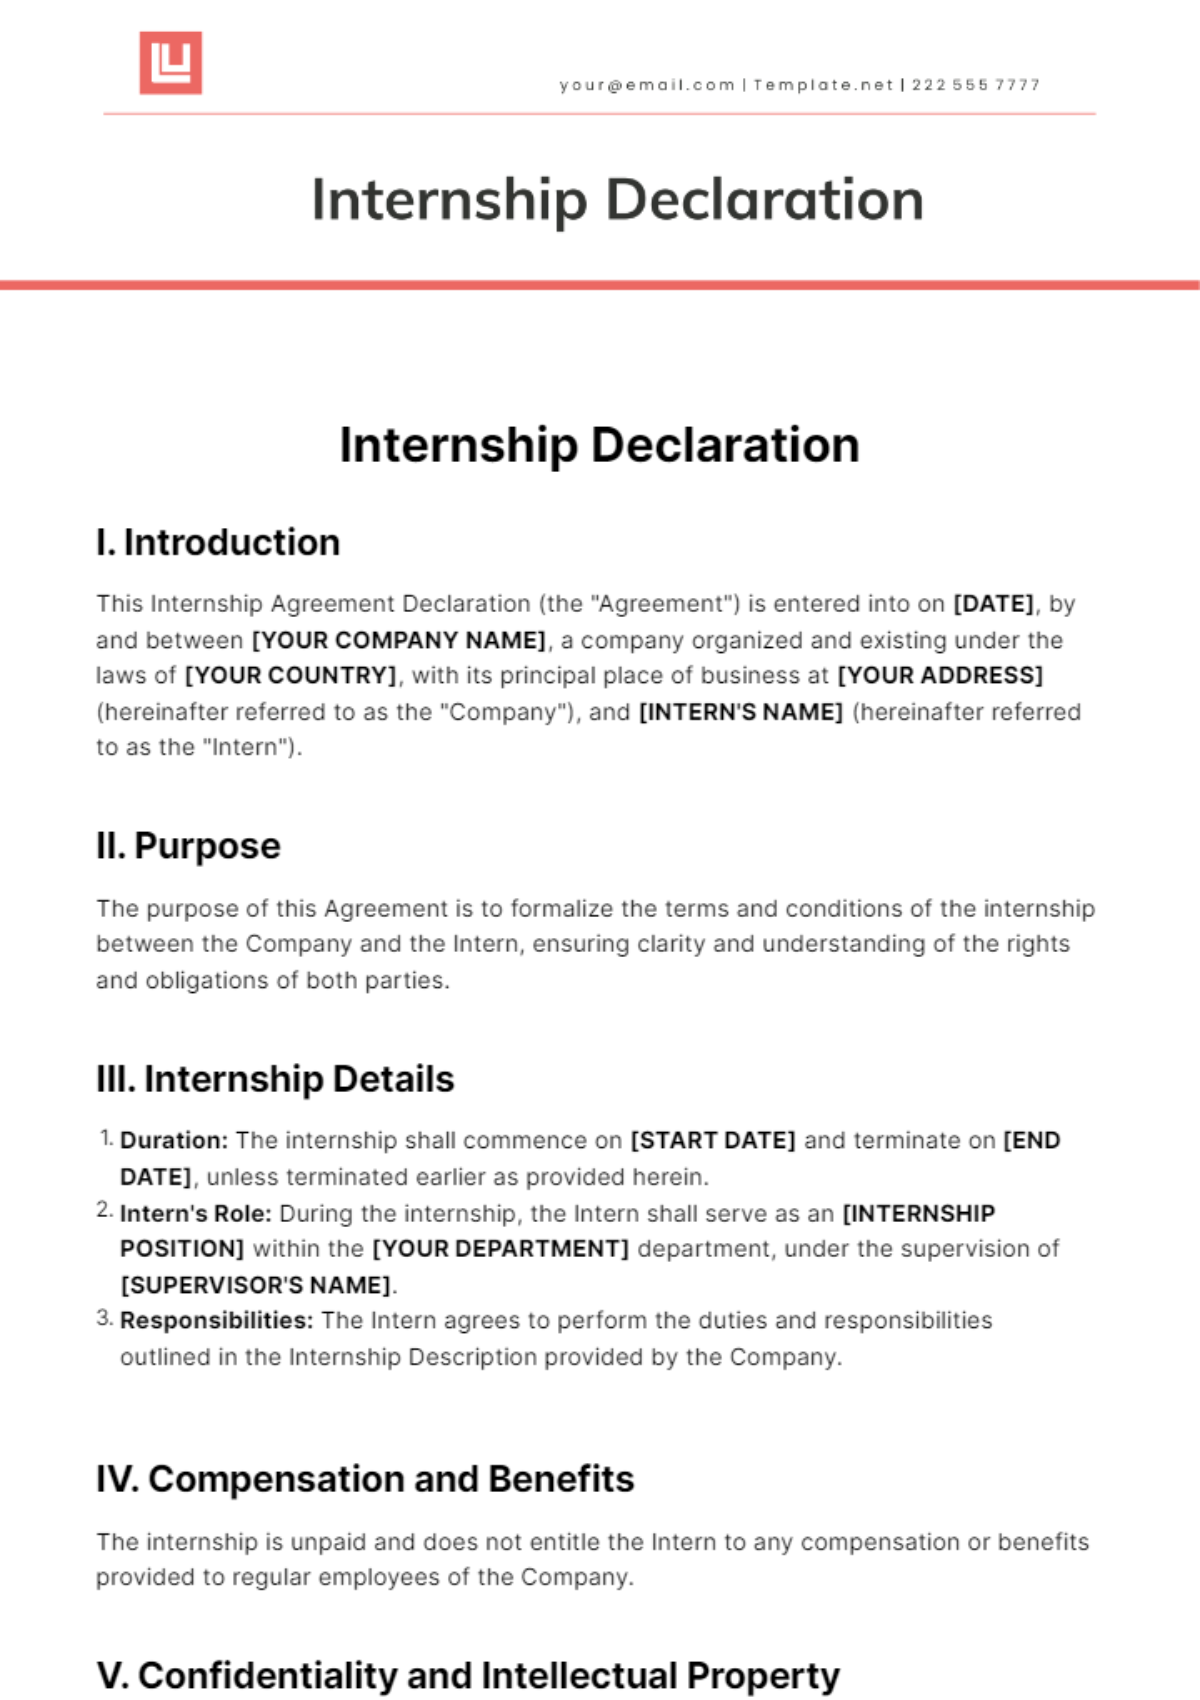 Internship Declaration Template